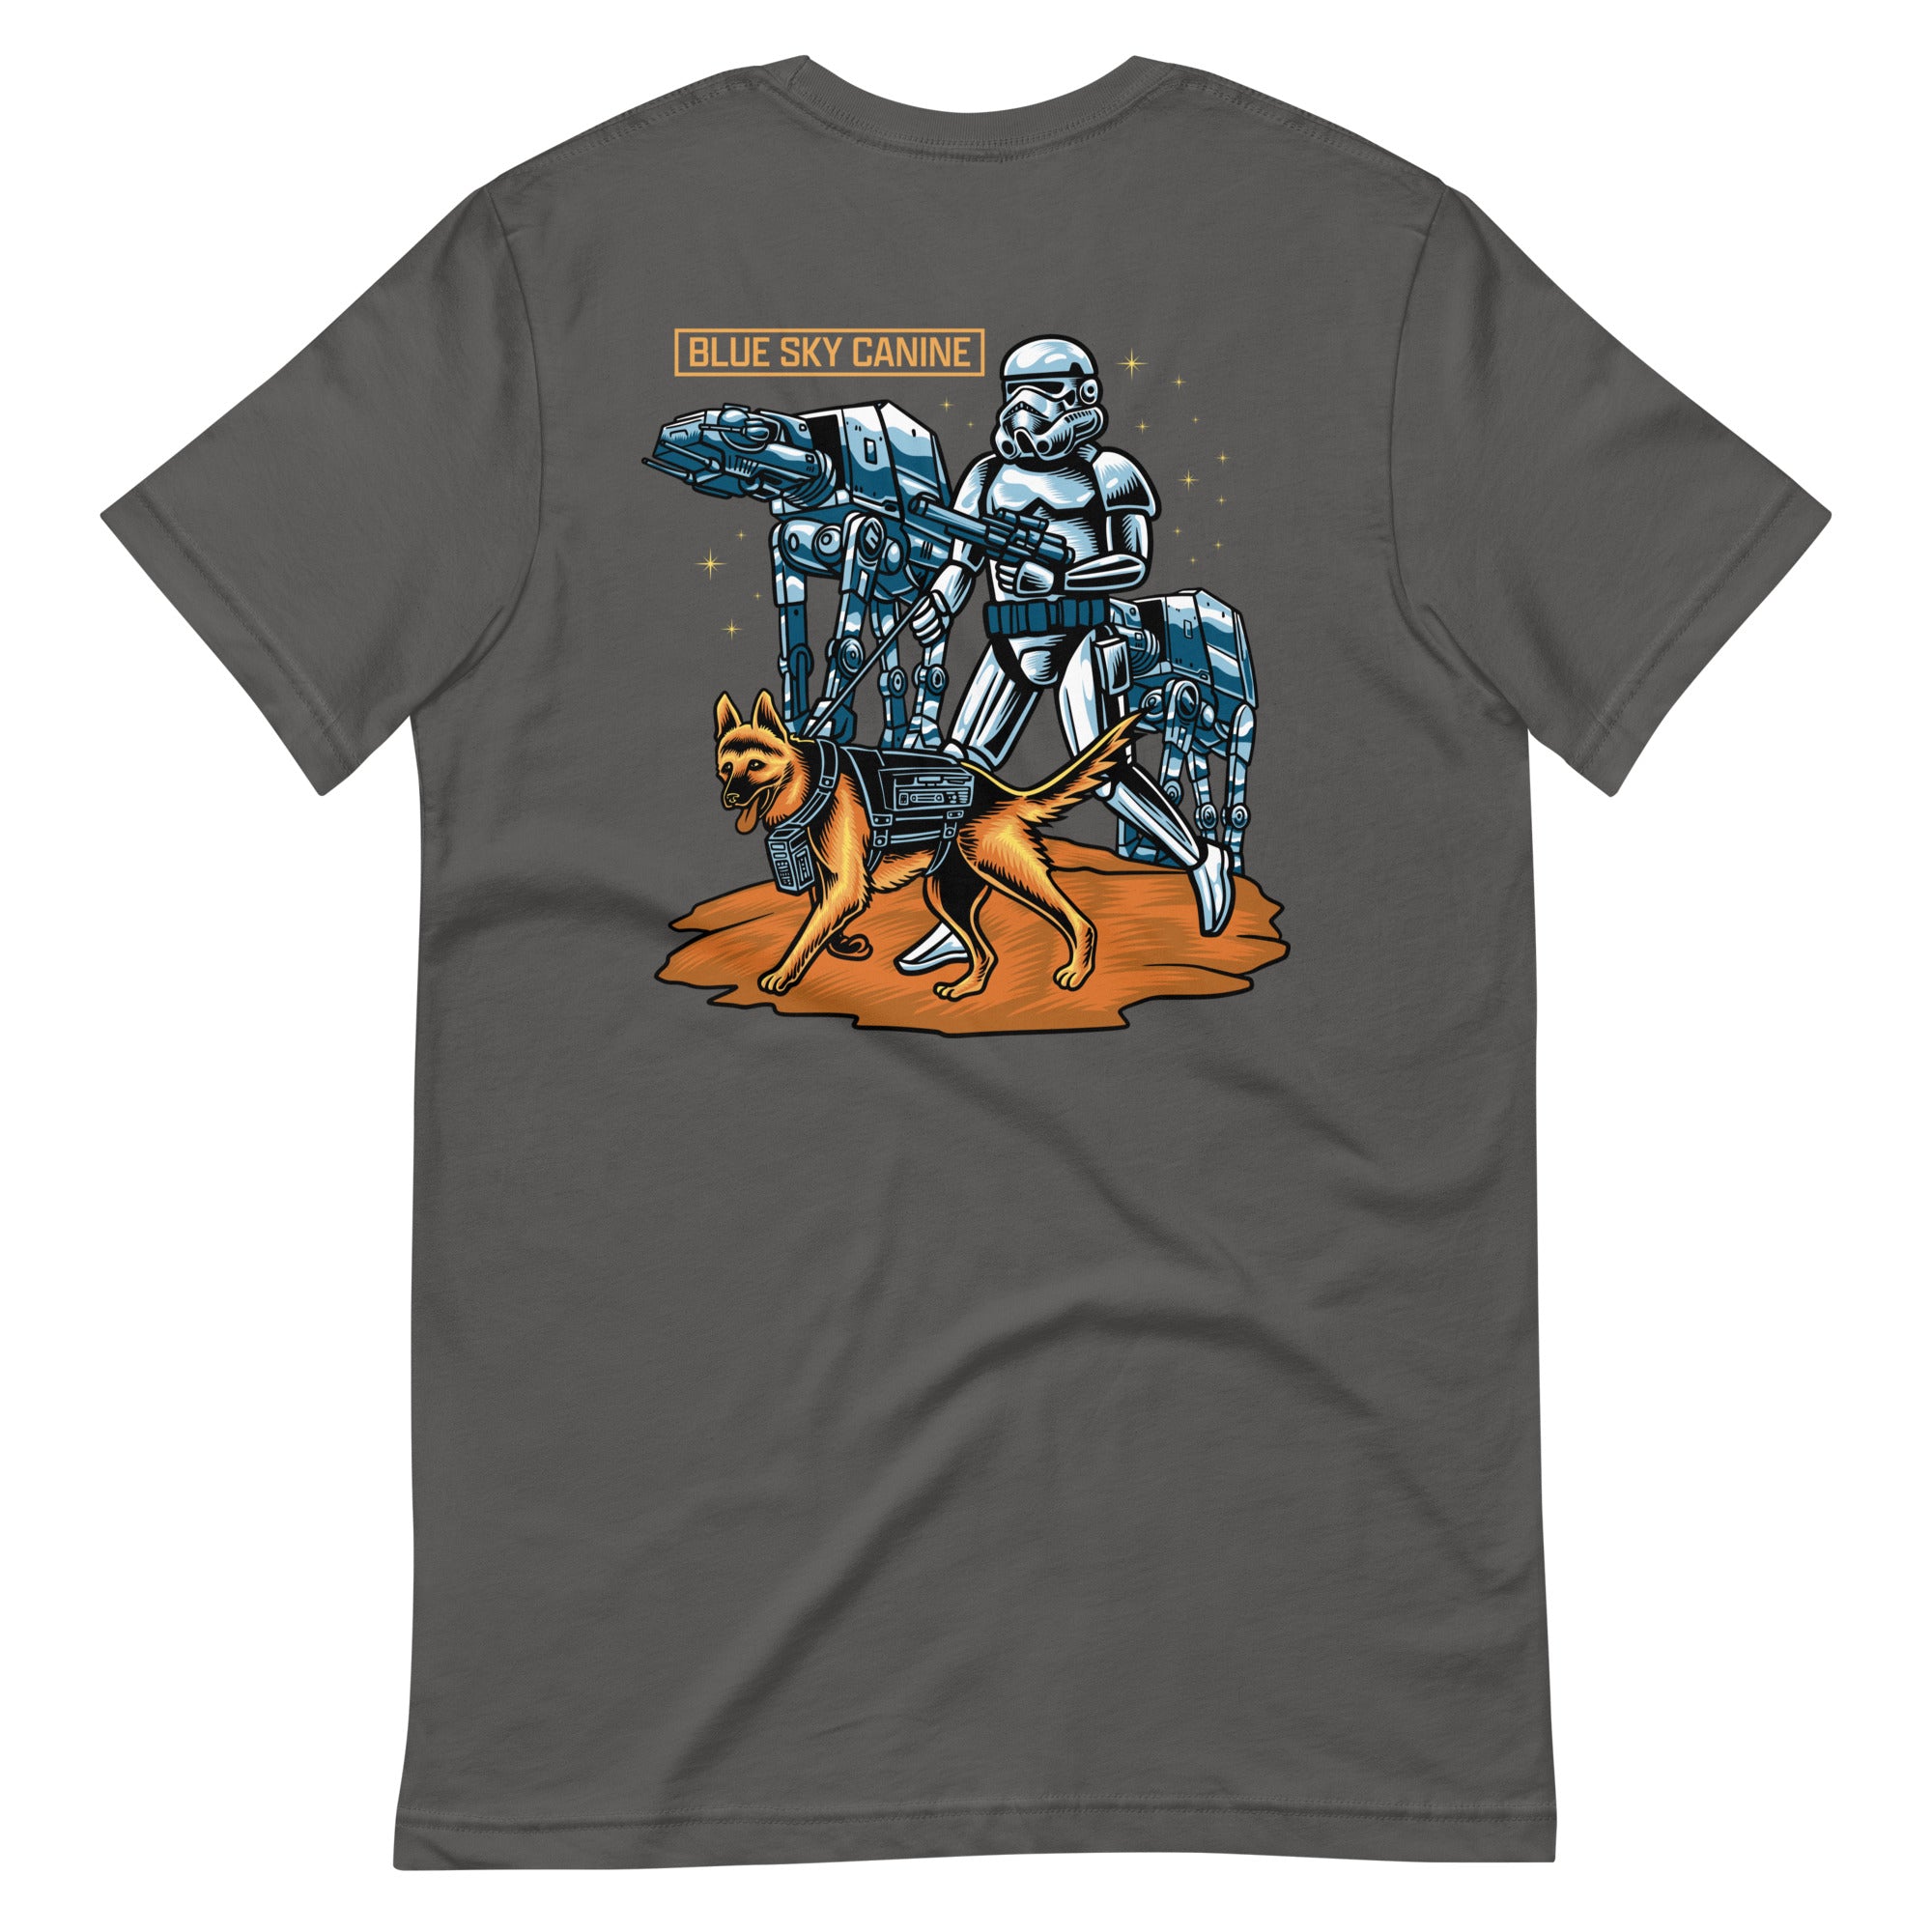 Stormdog t-shirt